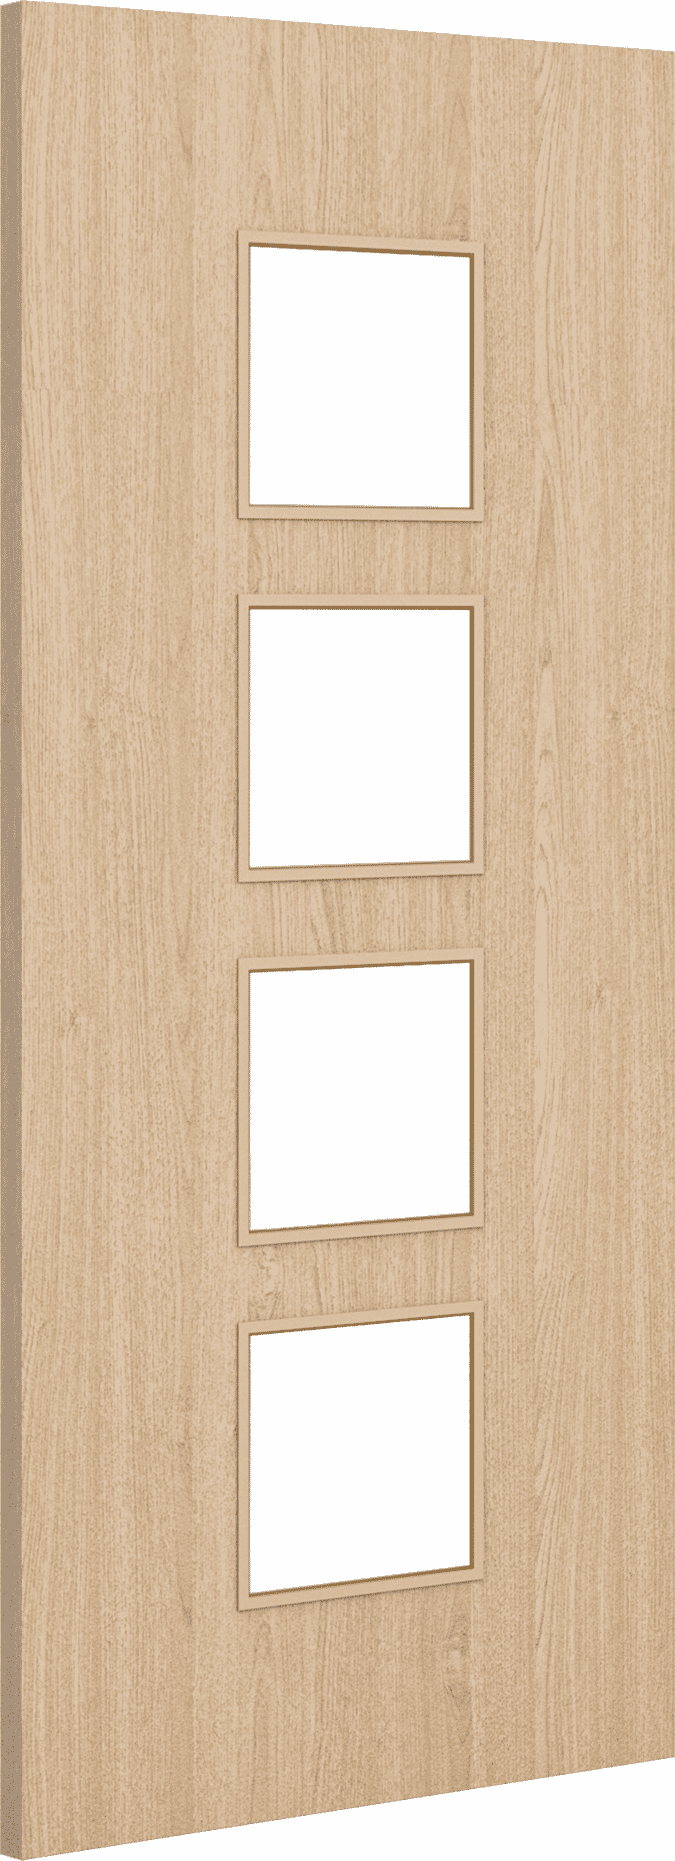 2040mm x 926mm x 44mm Architectural Oak 09 Frosted Glazed - Prefinished FD30 Fire Door Blank